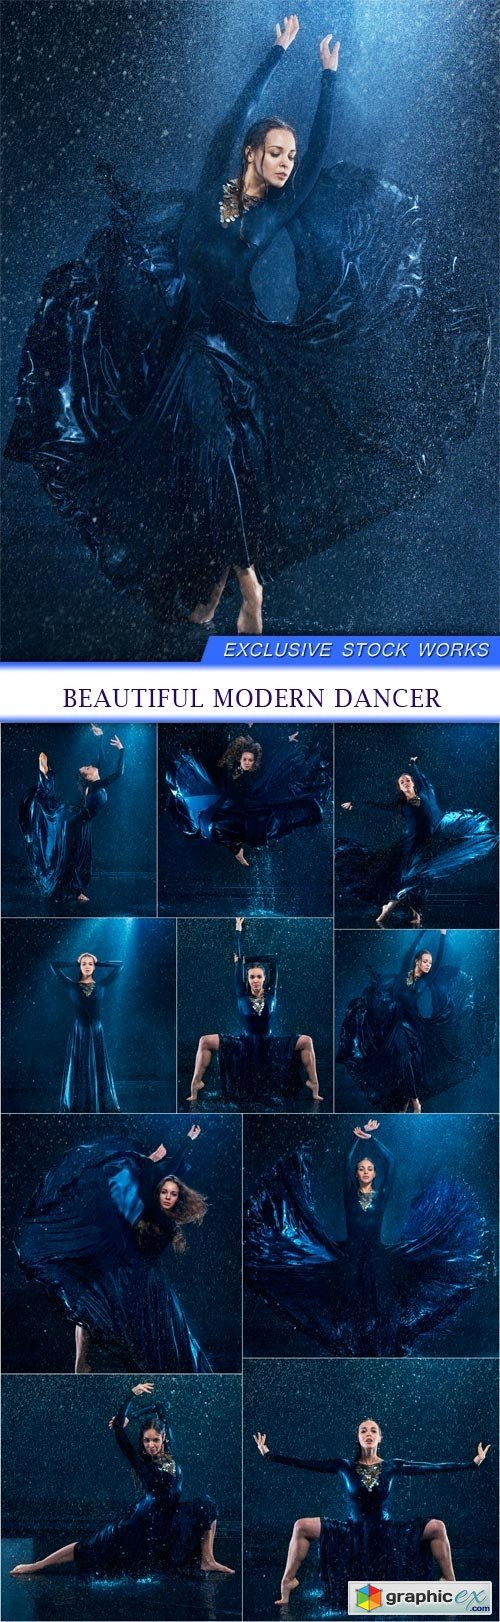 Beautiful modern dancer 10X JPEG